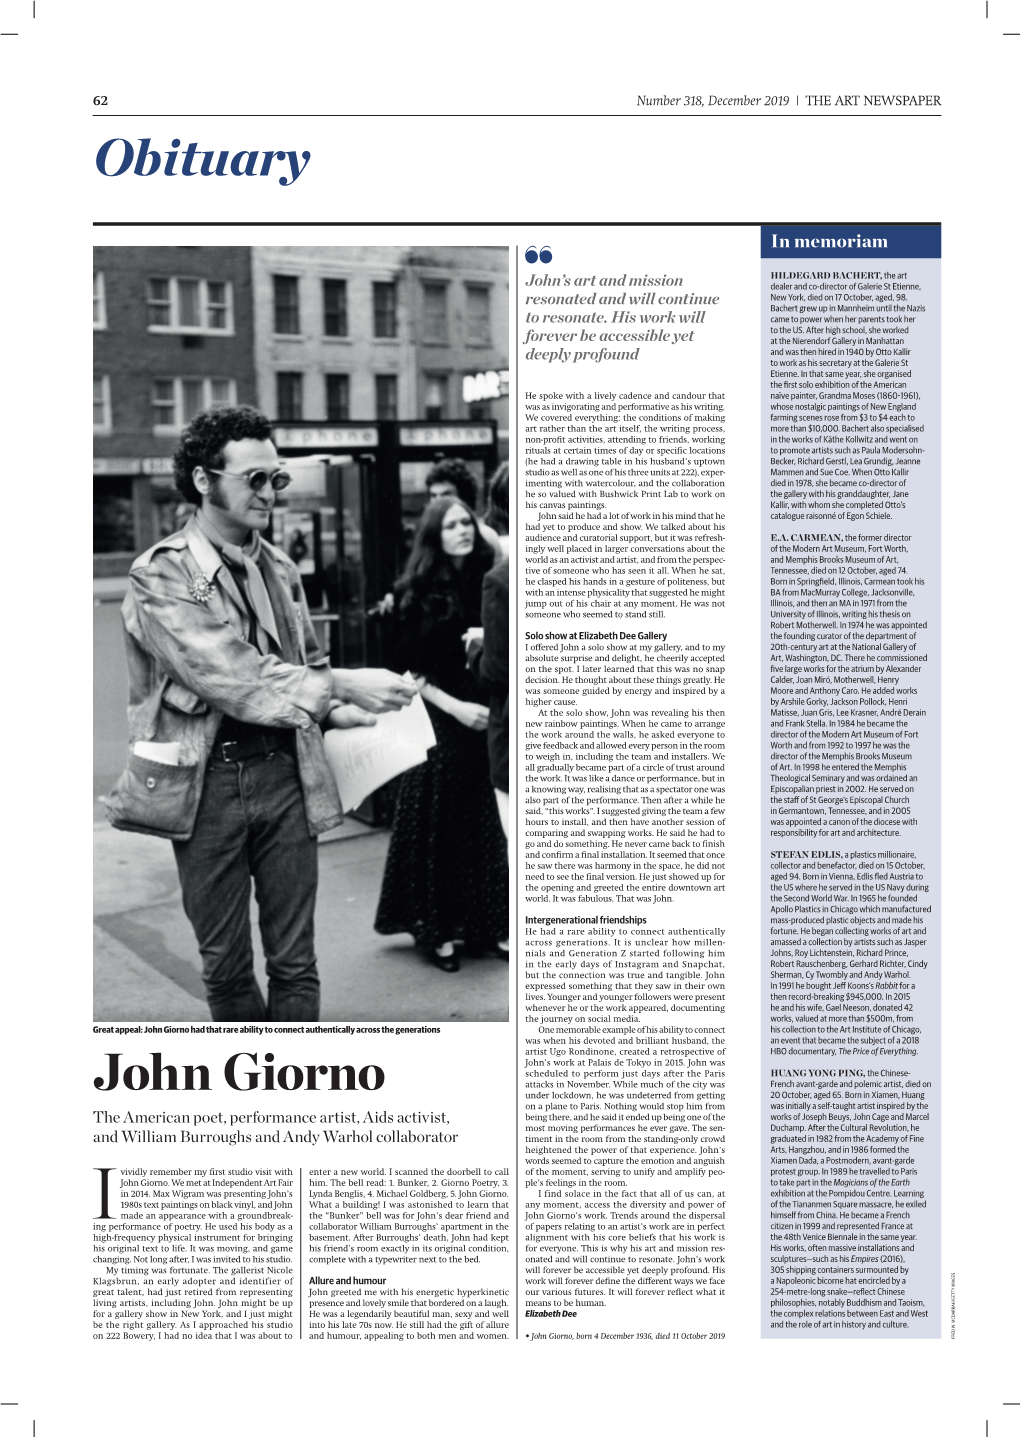 John Giorno Obituary